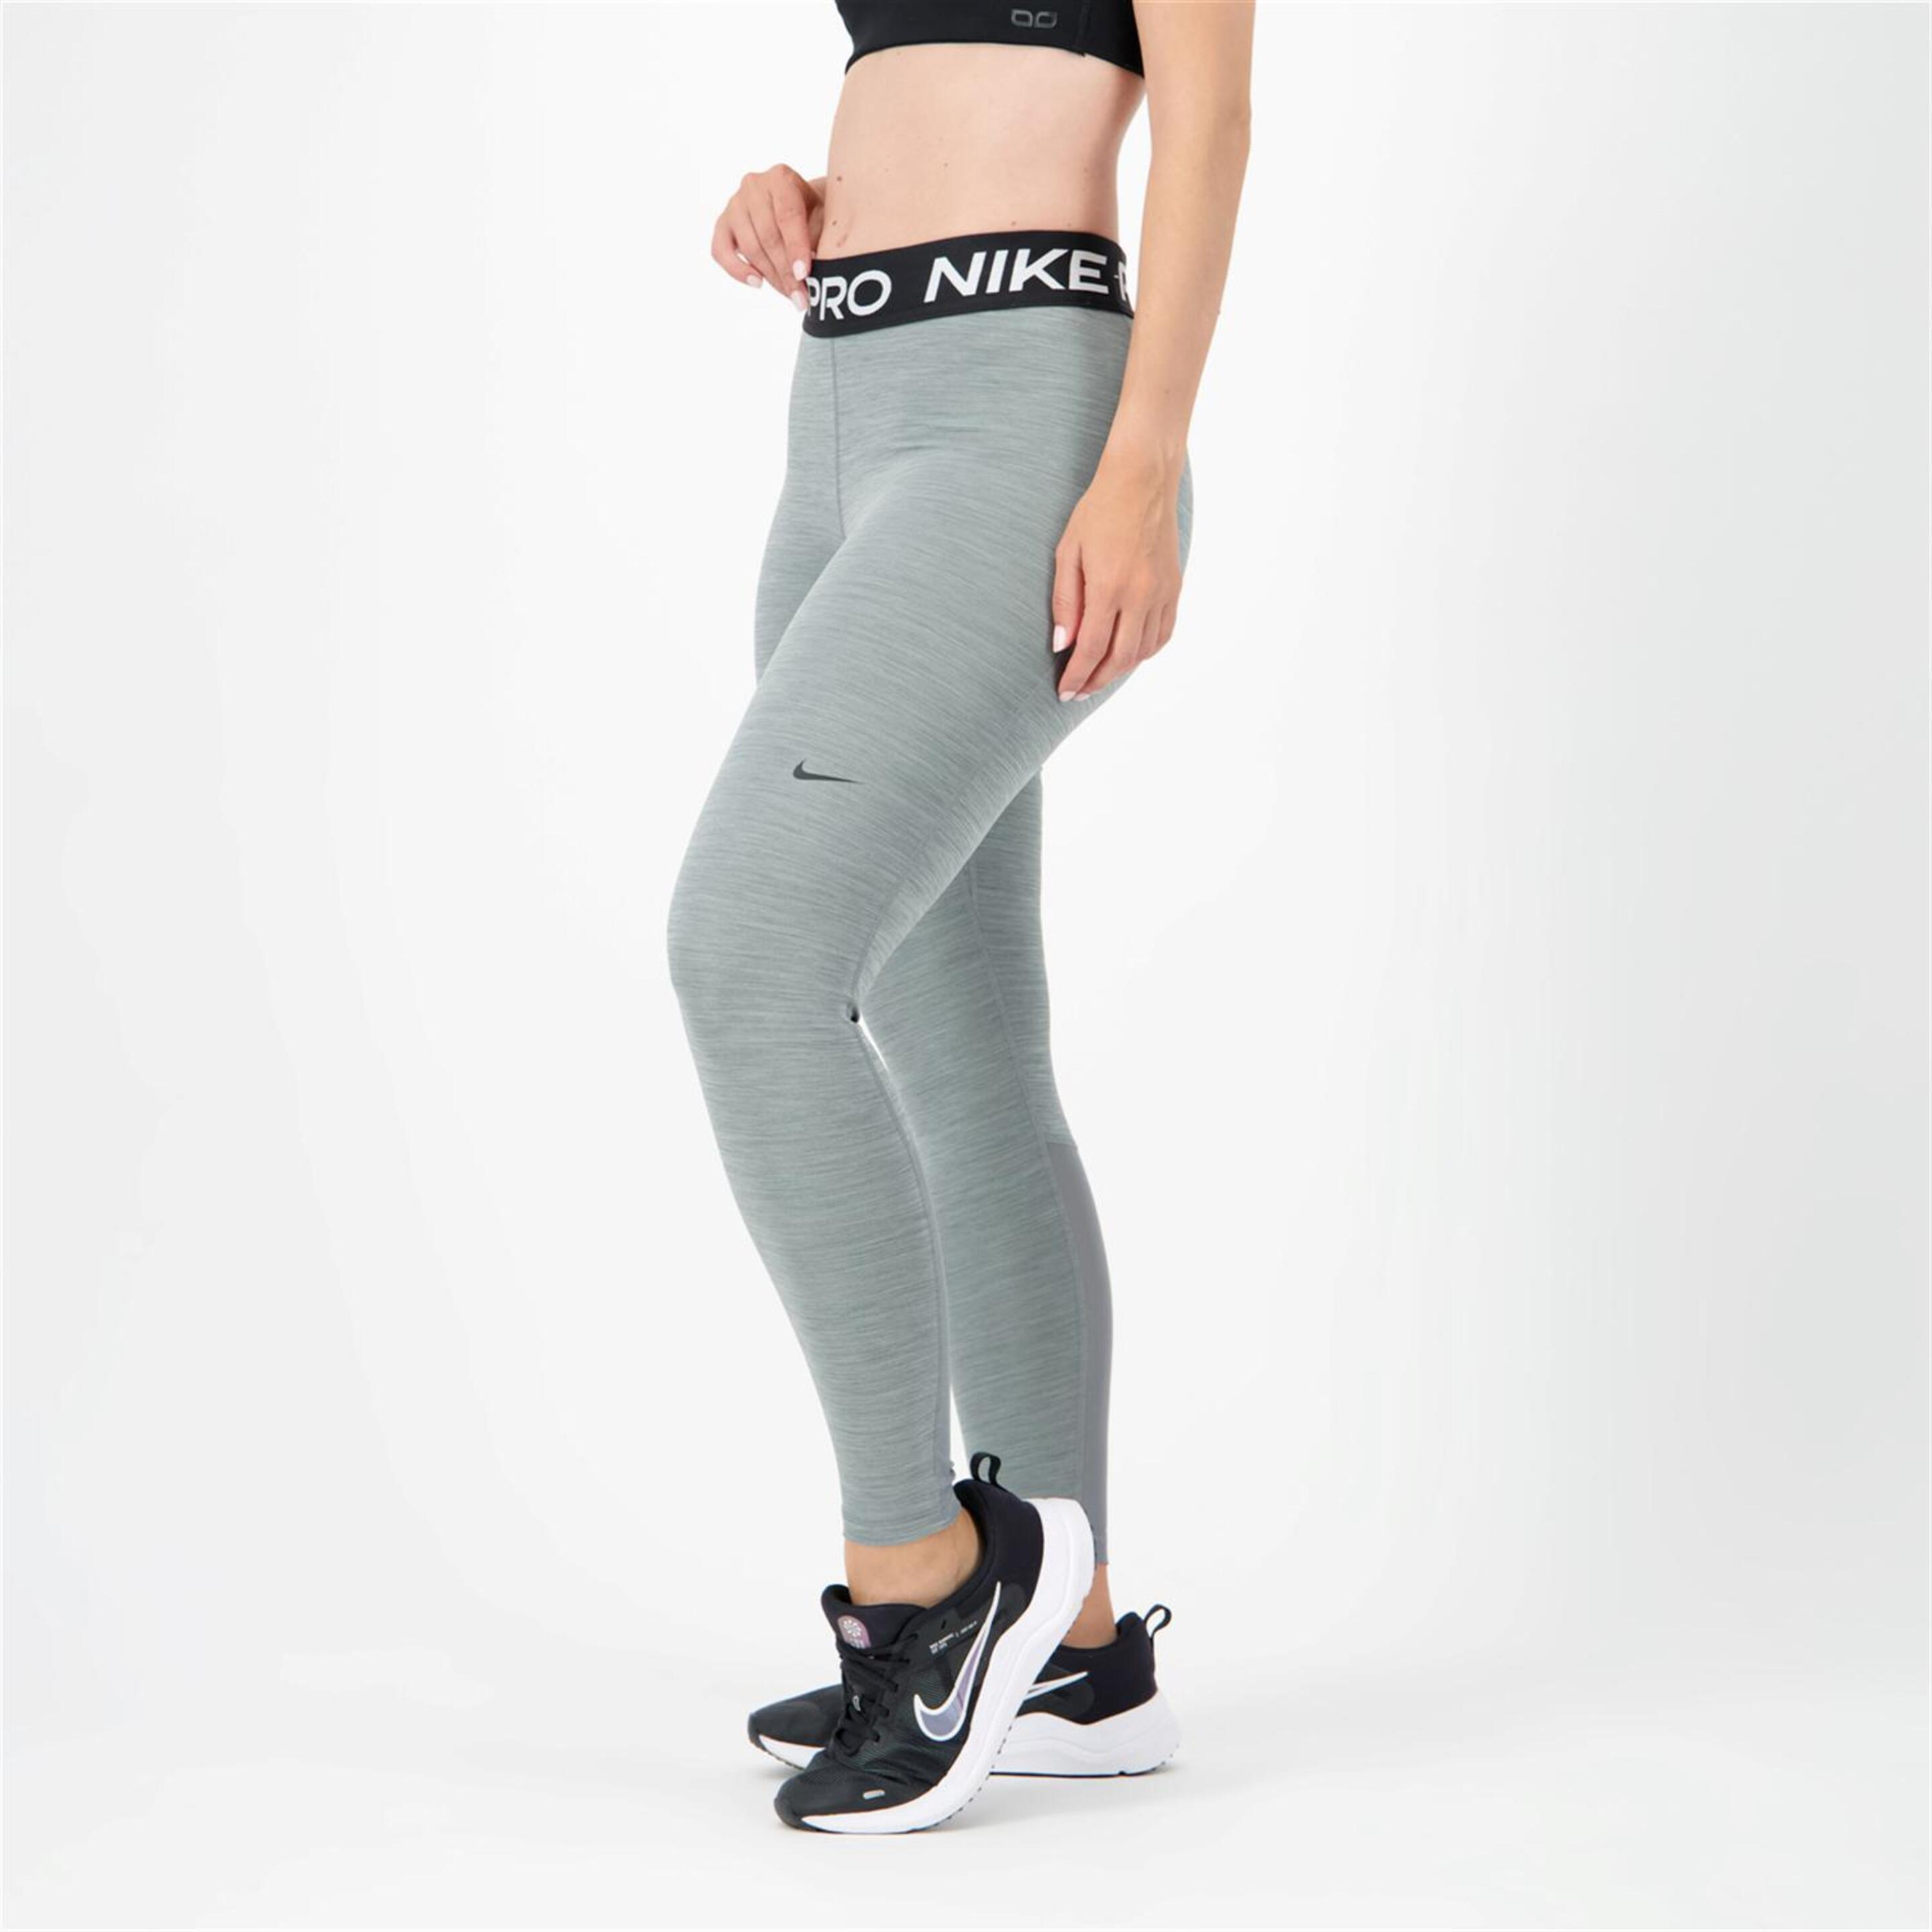 Nike Pro - gris - Mallas Running Mujer